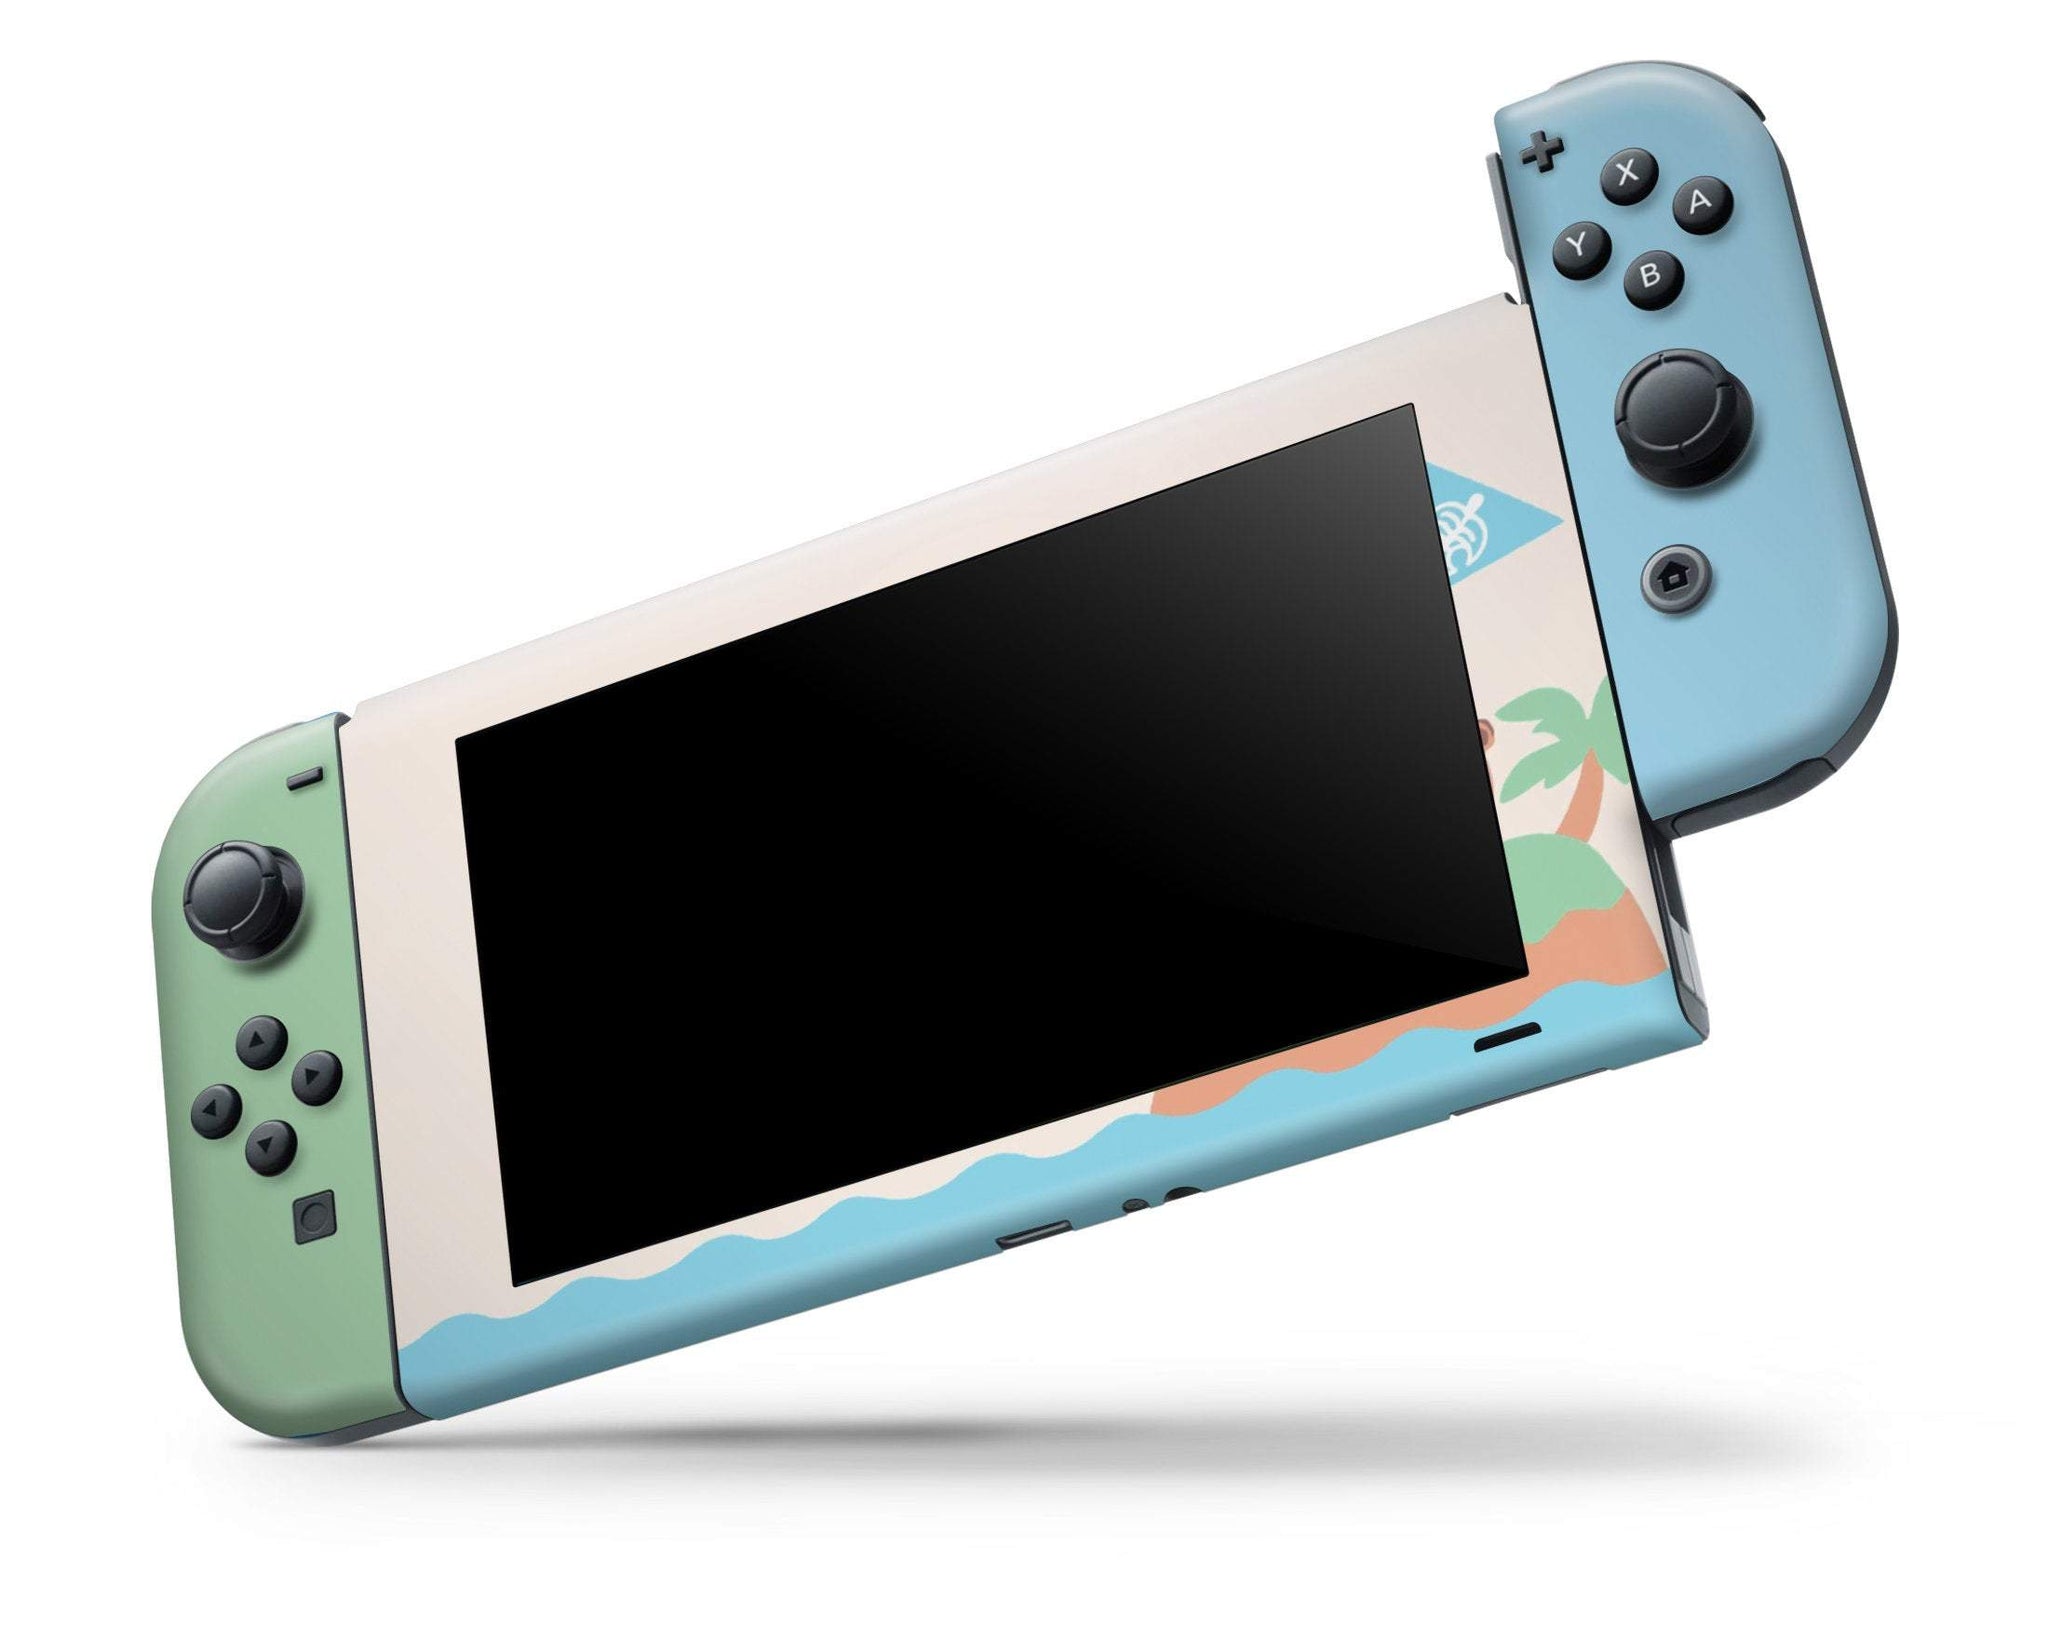 Animal Crossing New Horizon Switch Nintendo Switch Skin